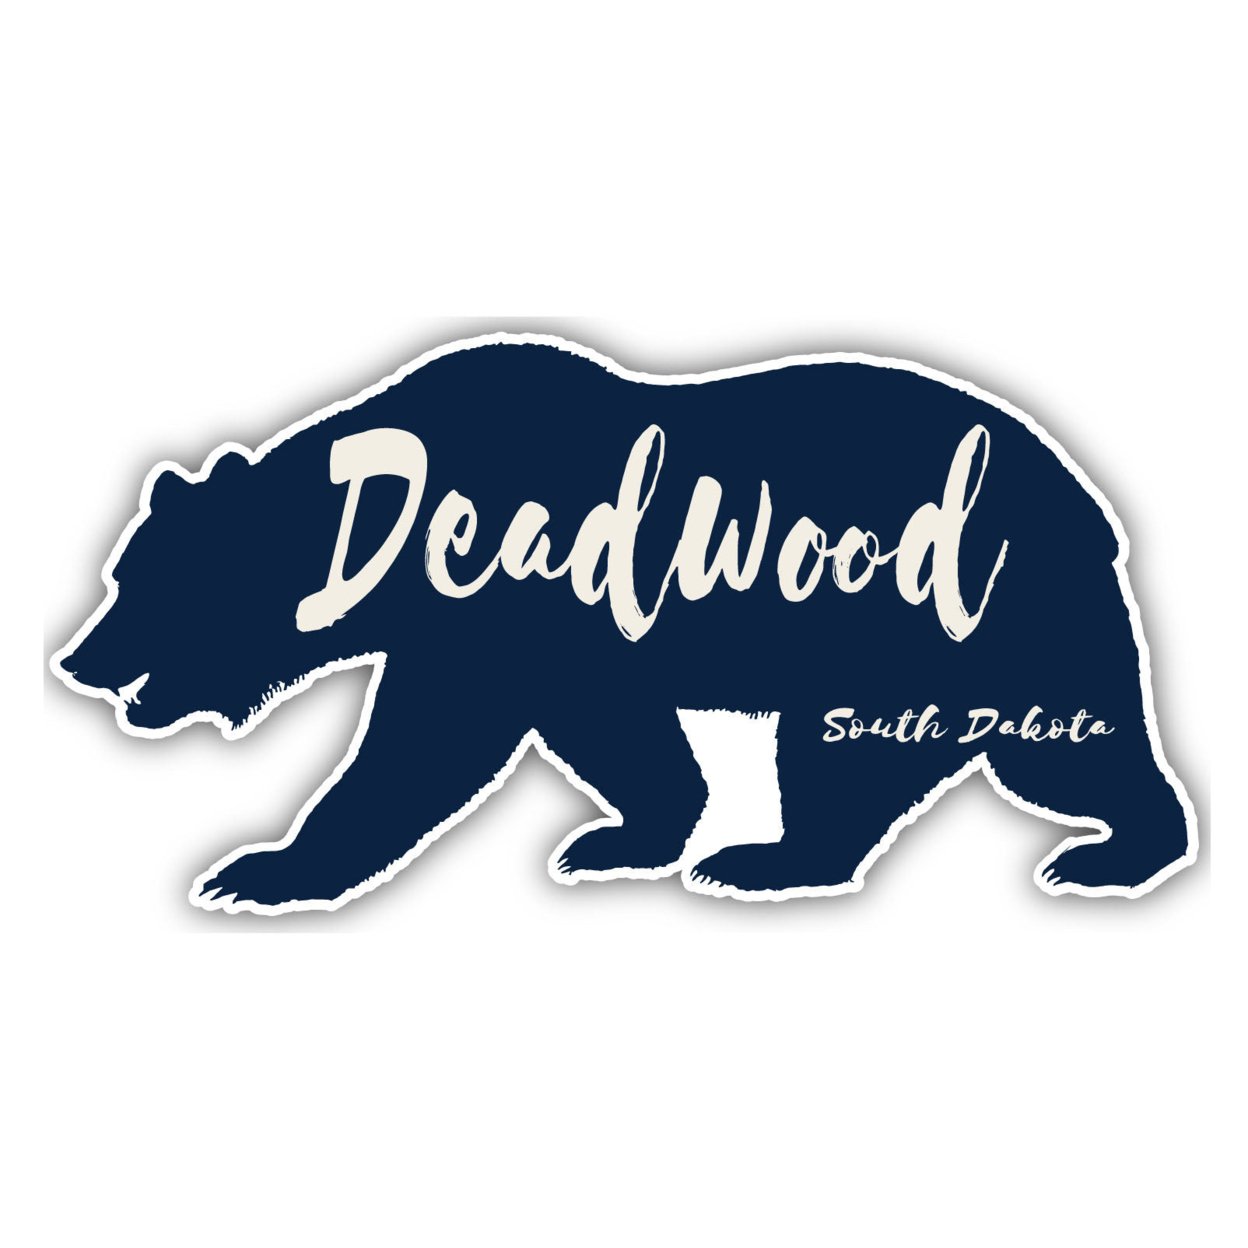 Deadwood South Dakota Souvenir Decorative Stickers (Choose Theme And Size) - Single Unit, 4-Inch, Bear